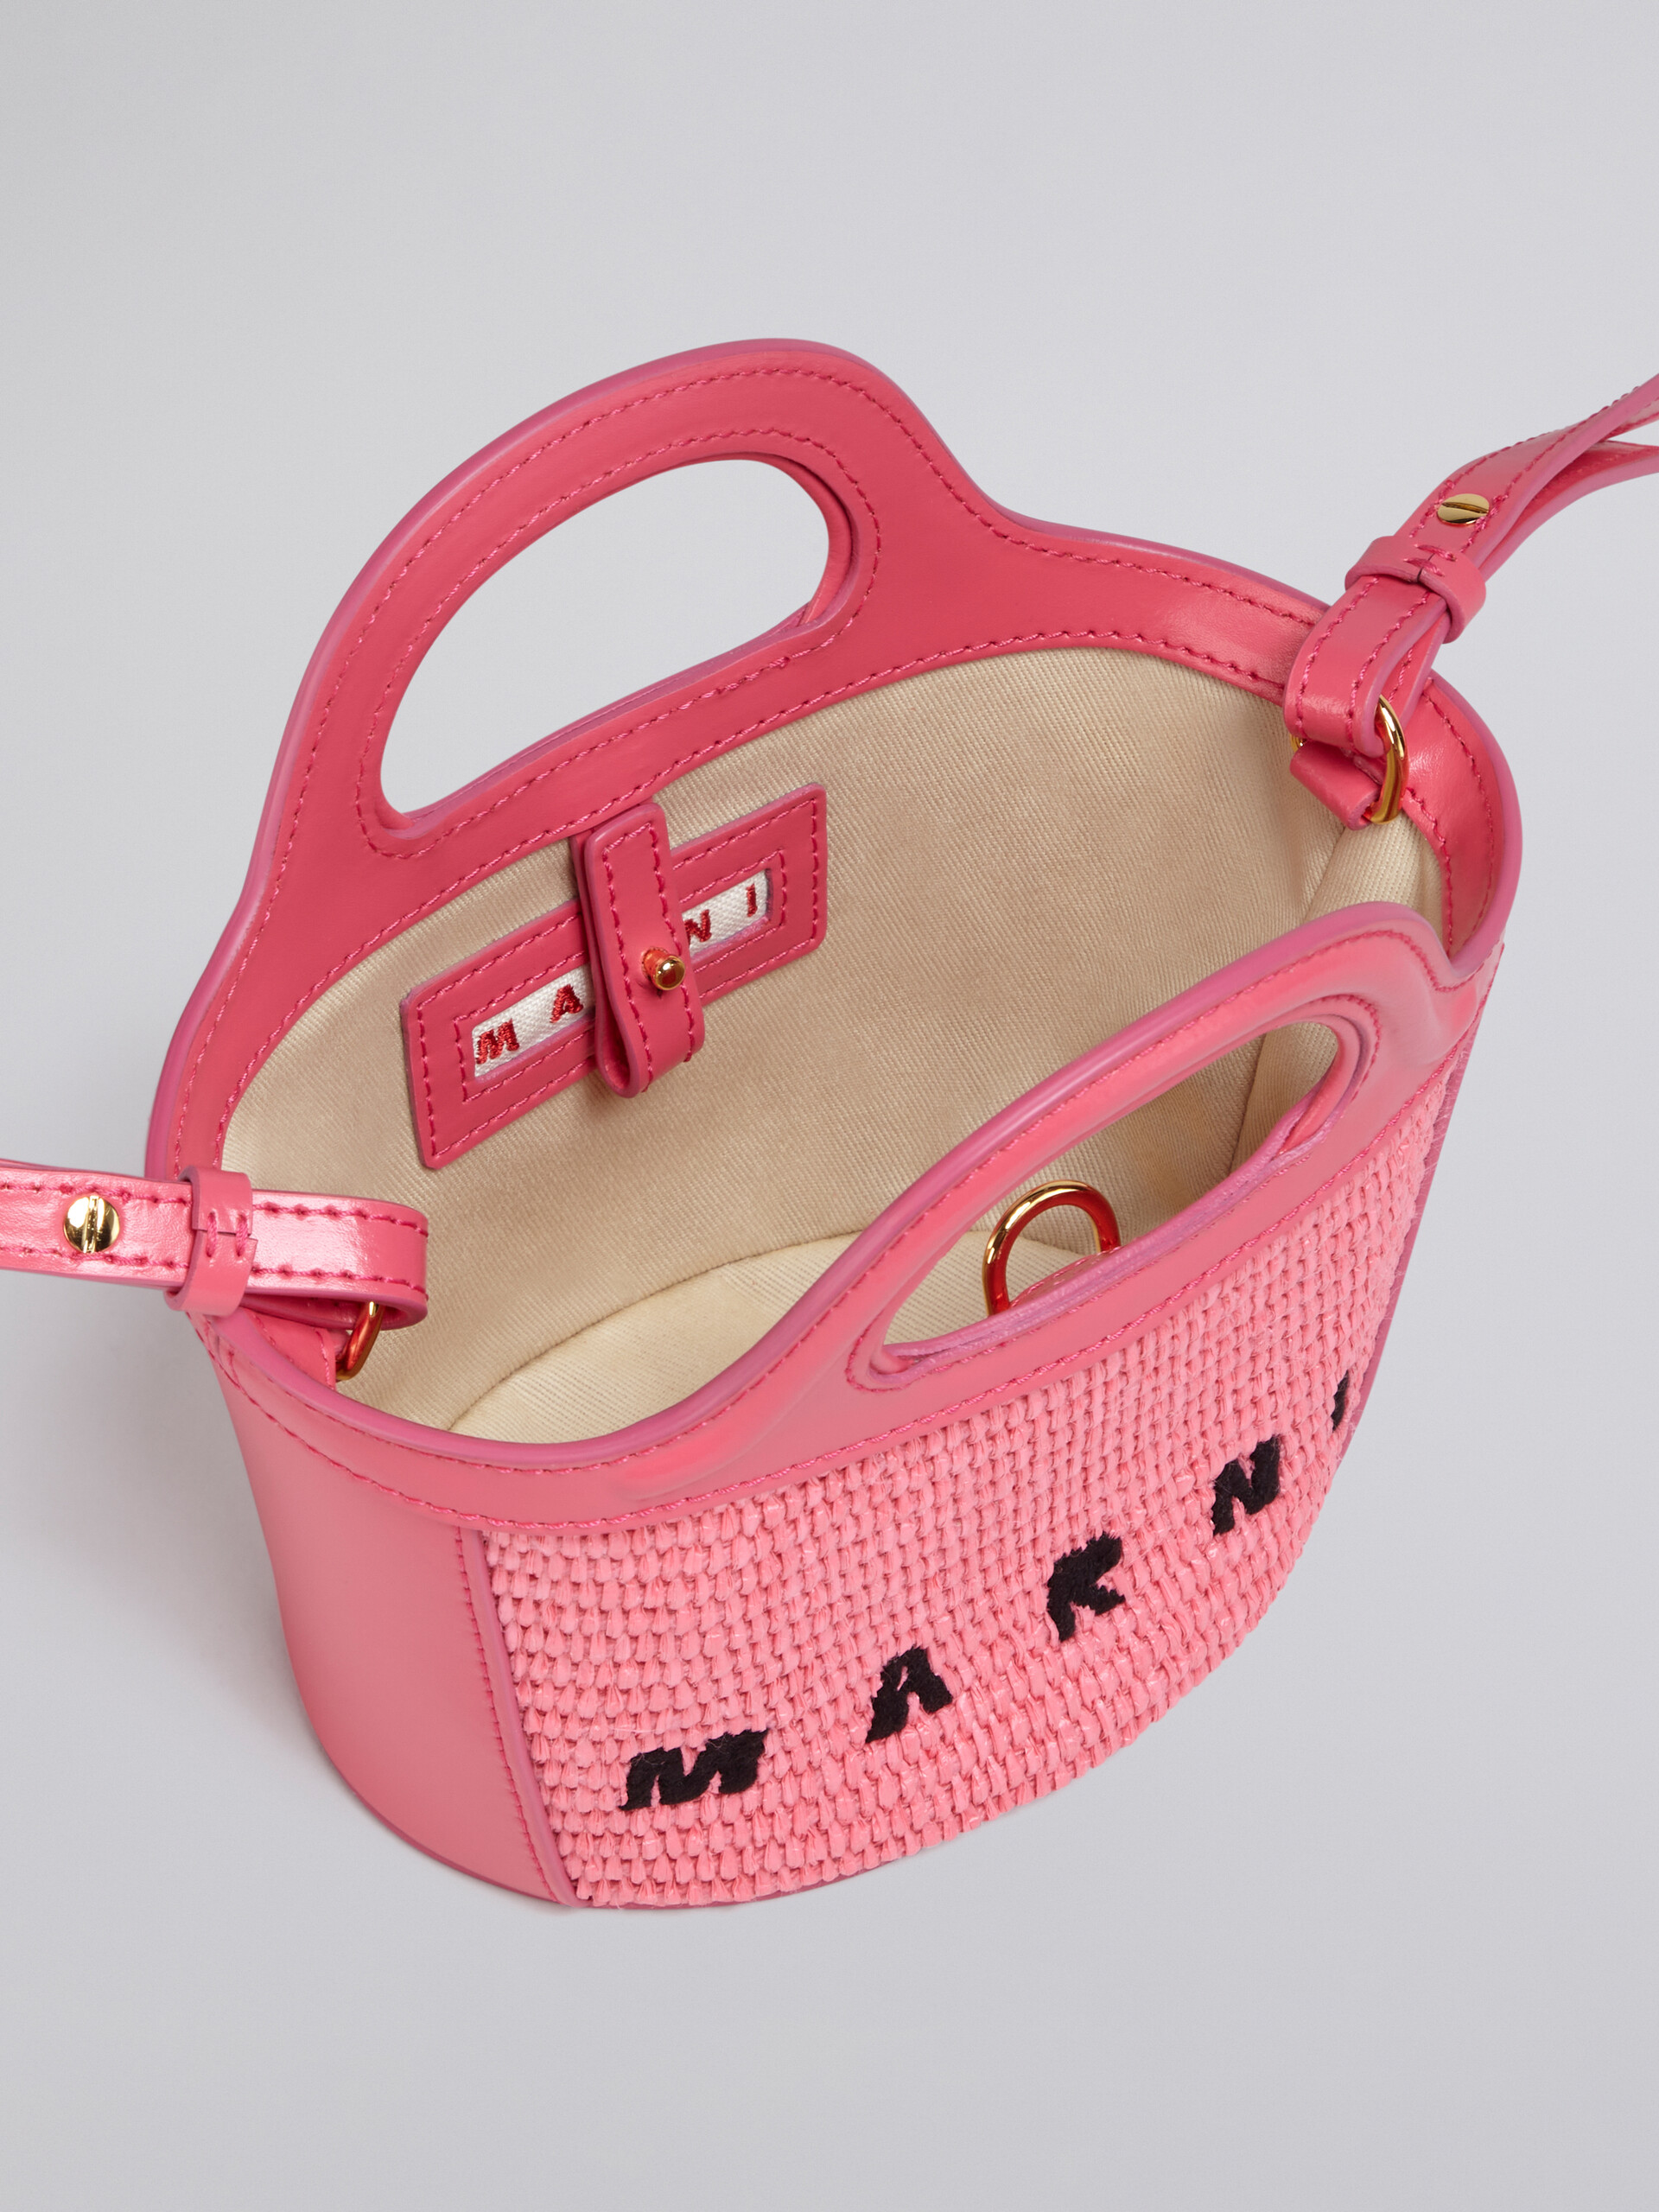 TROPICALIA micro bag in pink leather and raffia - Handbag - Image 4